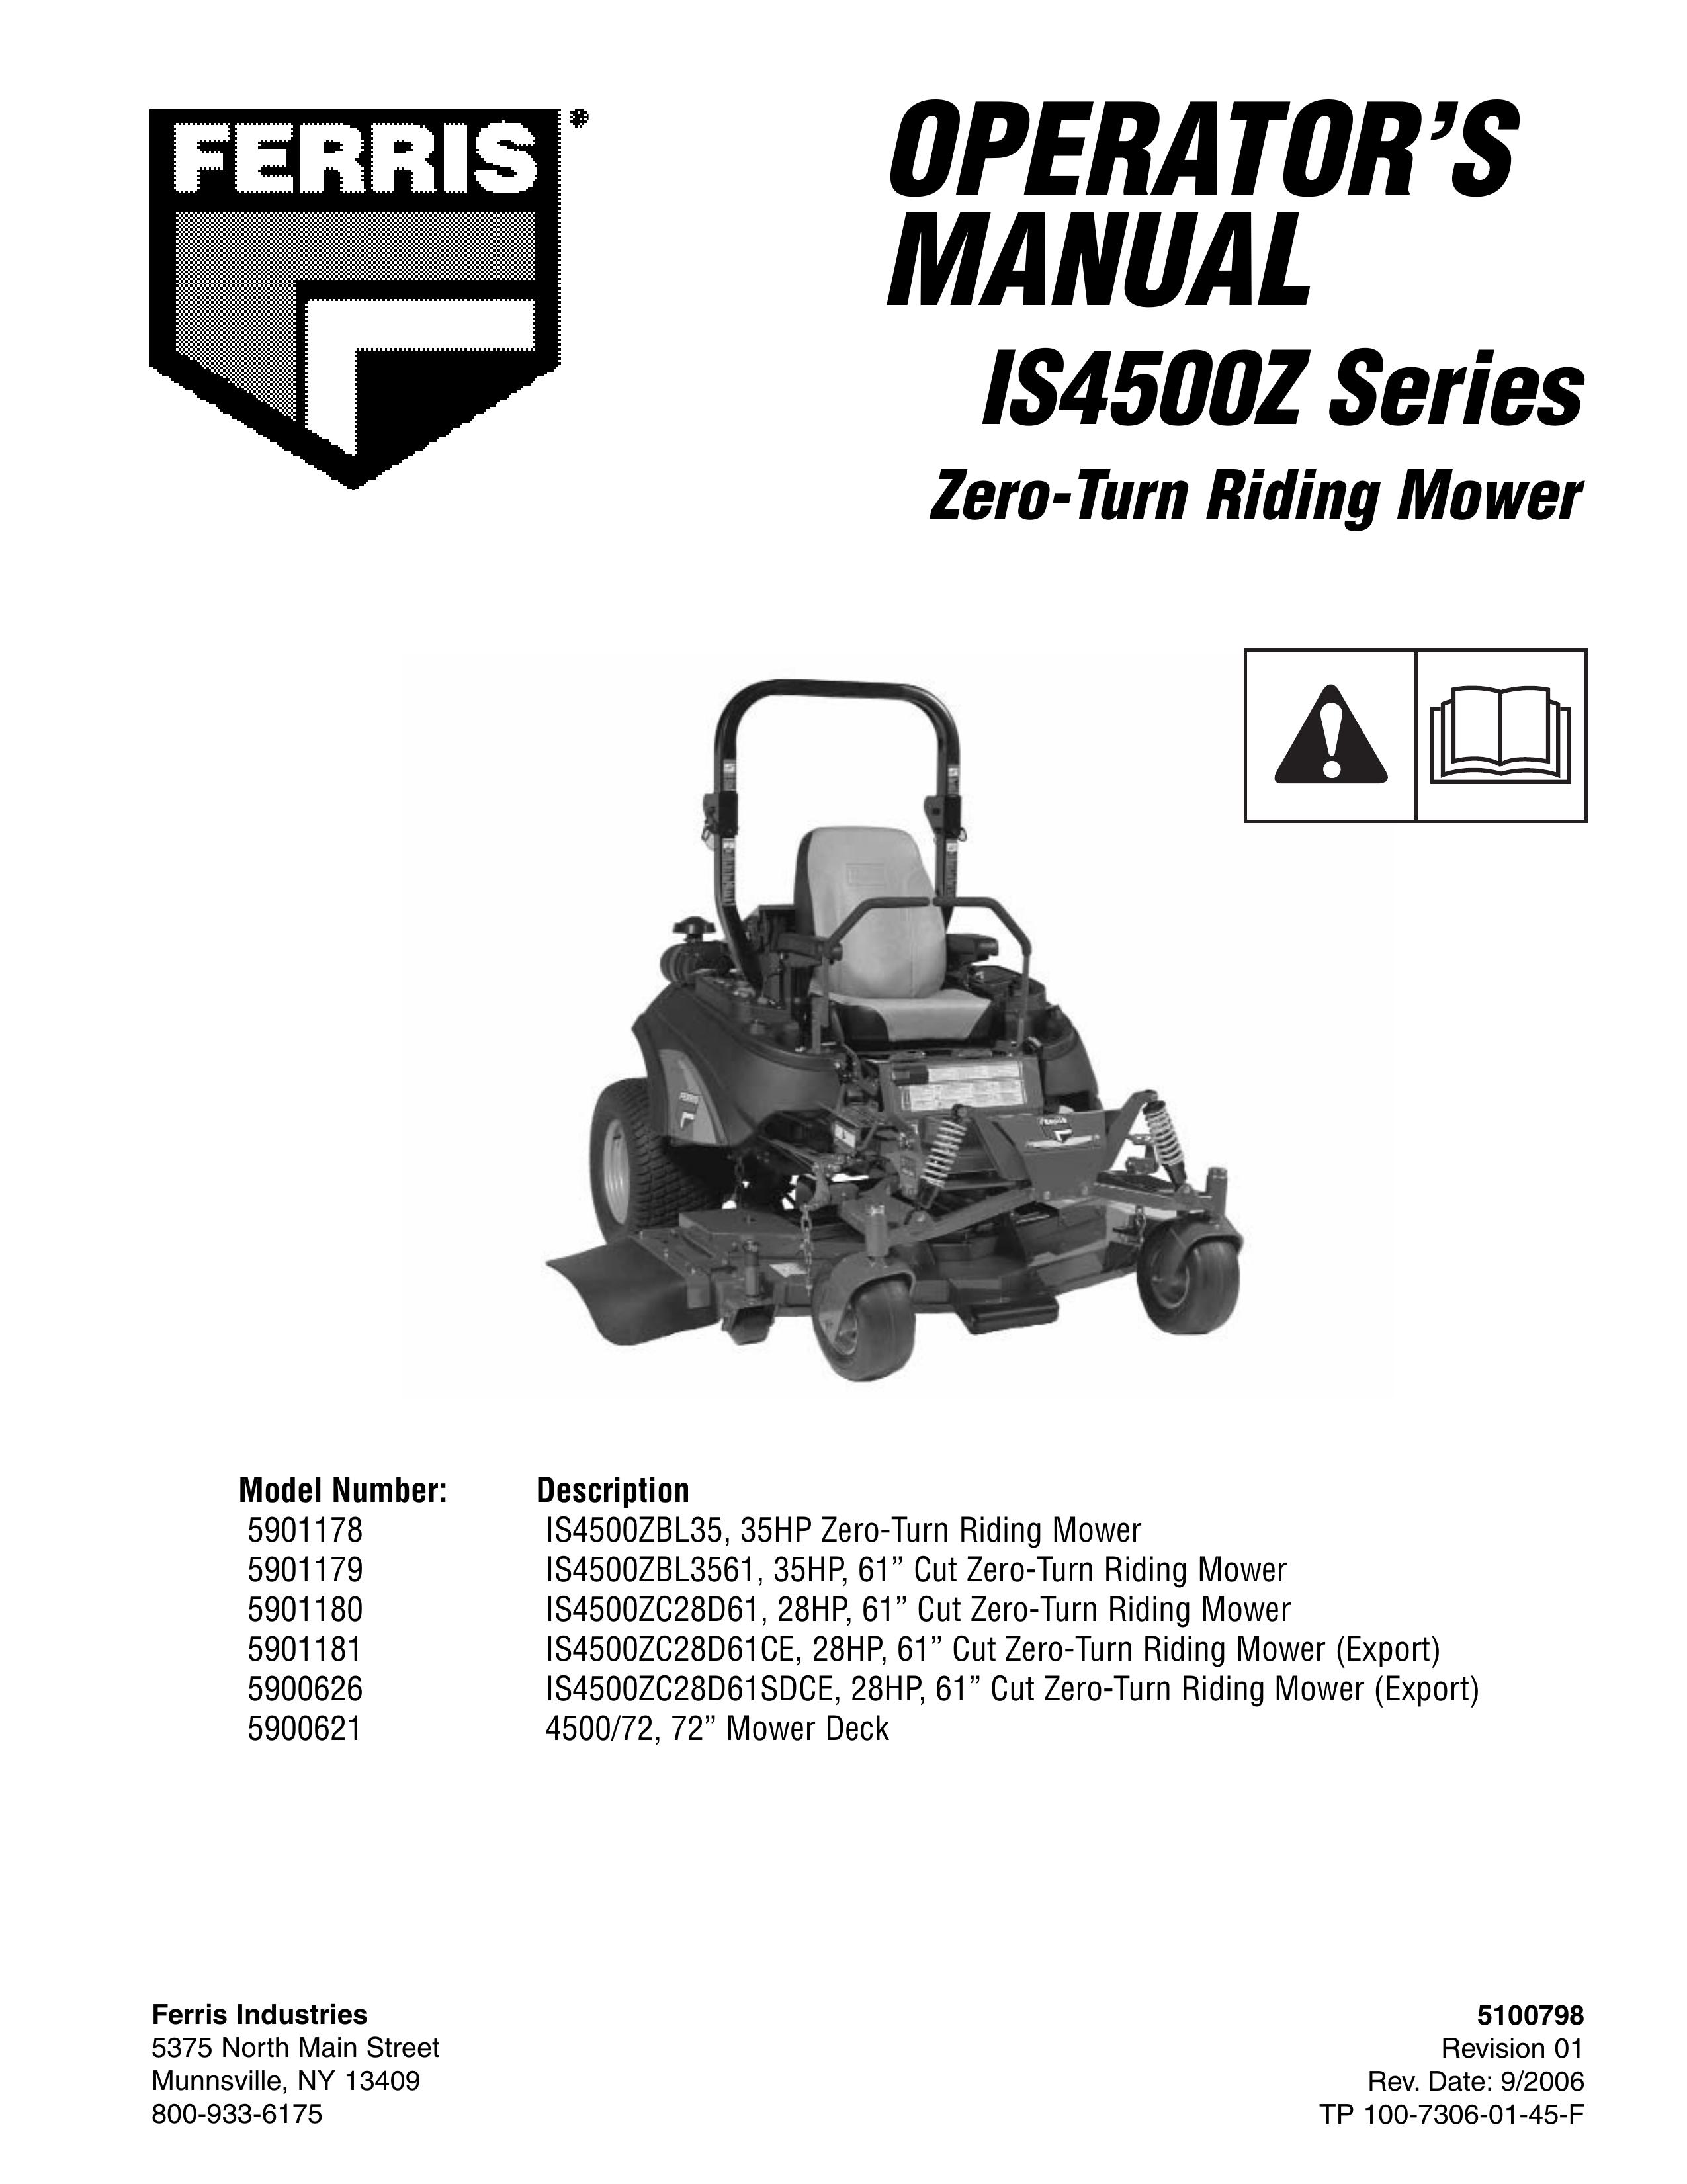 Ferris Industries 5900626 Lawn Mower User Manual